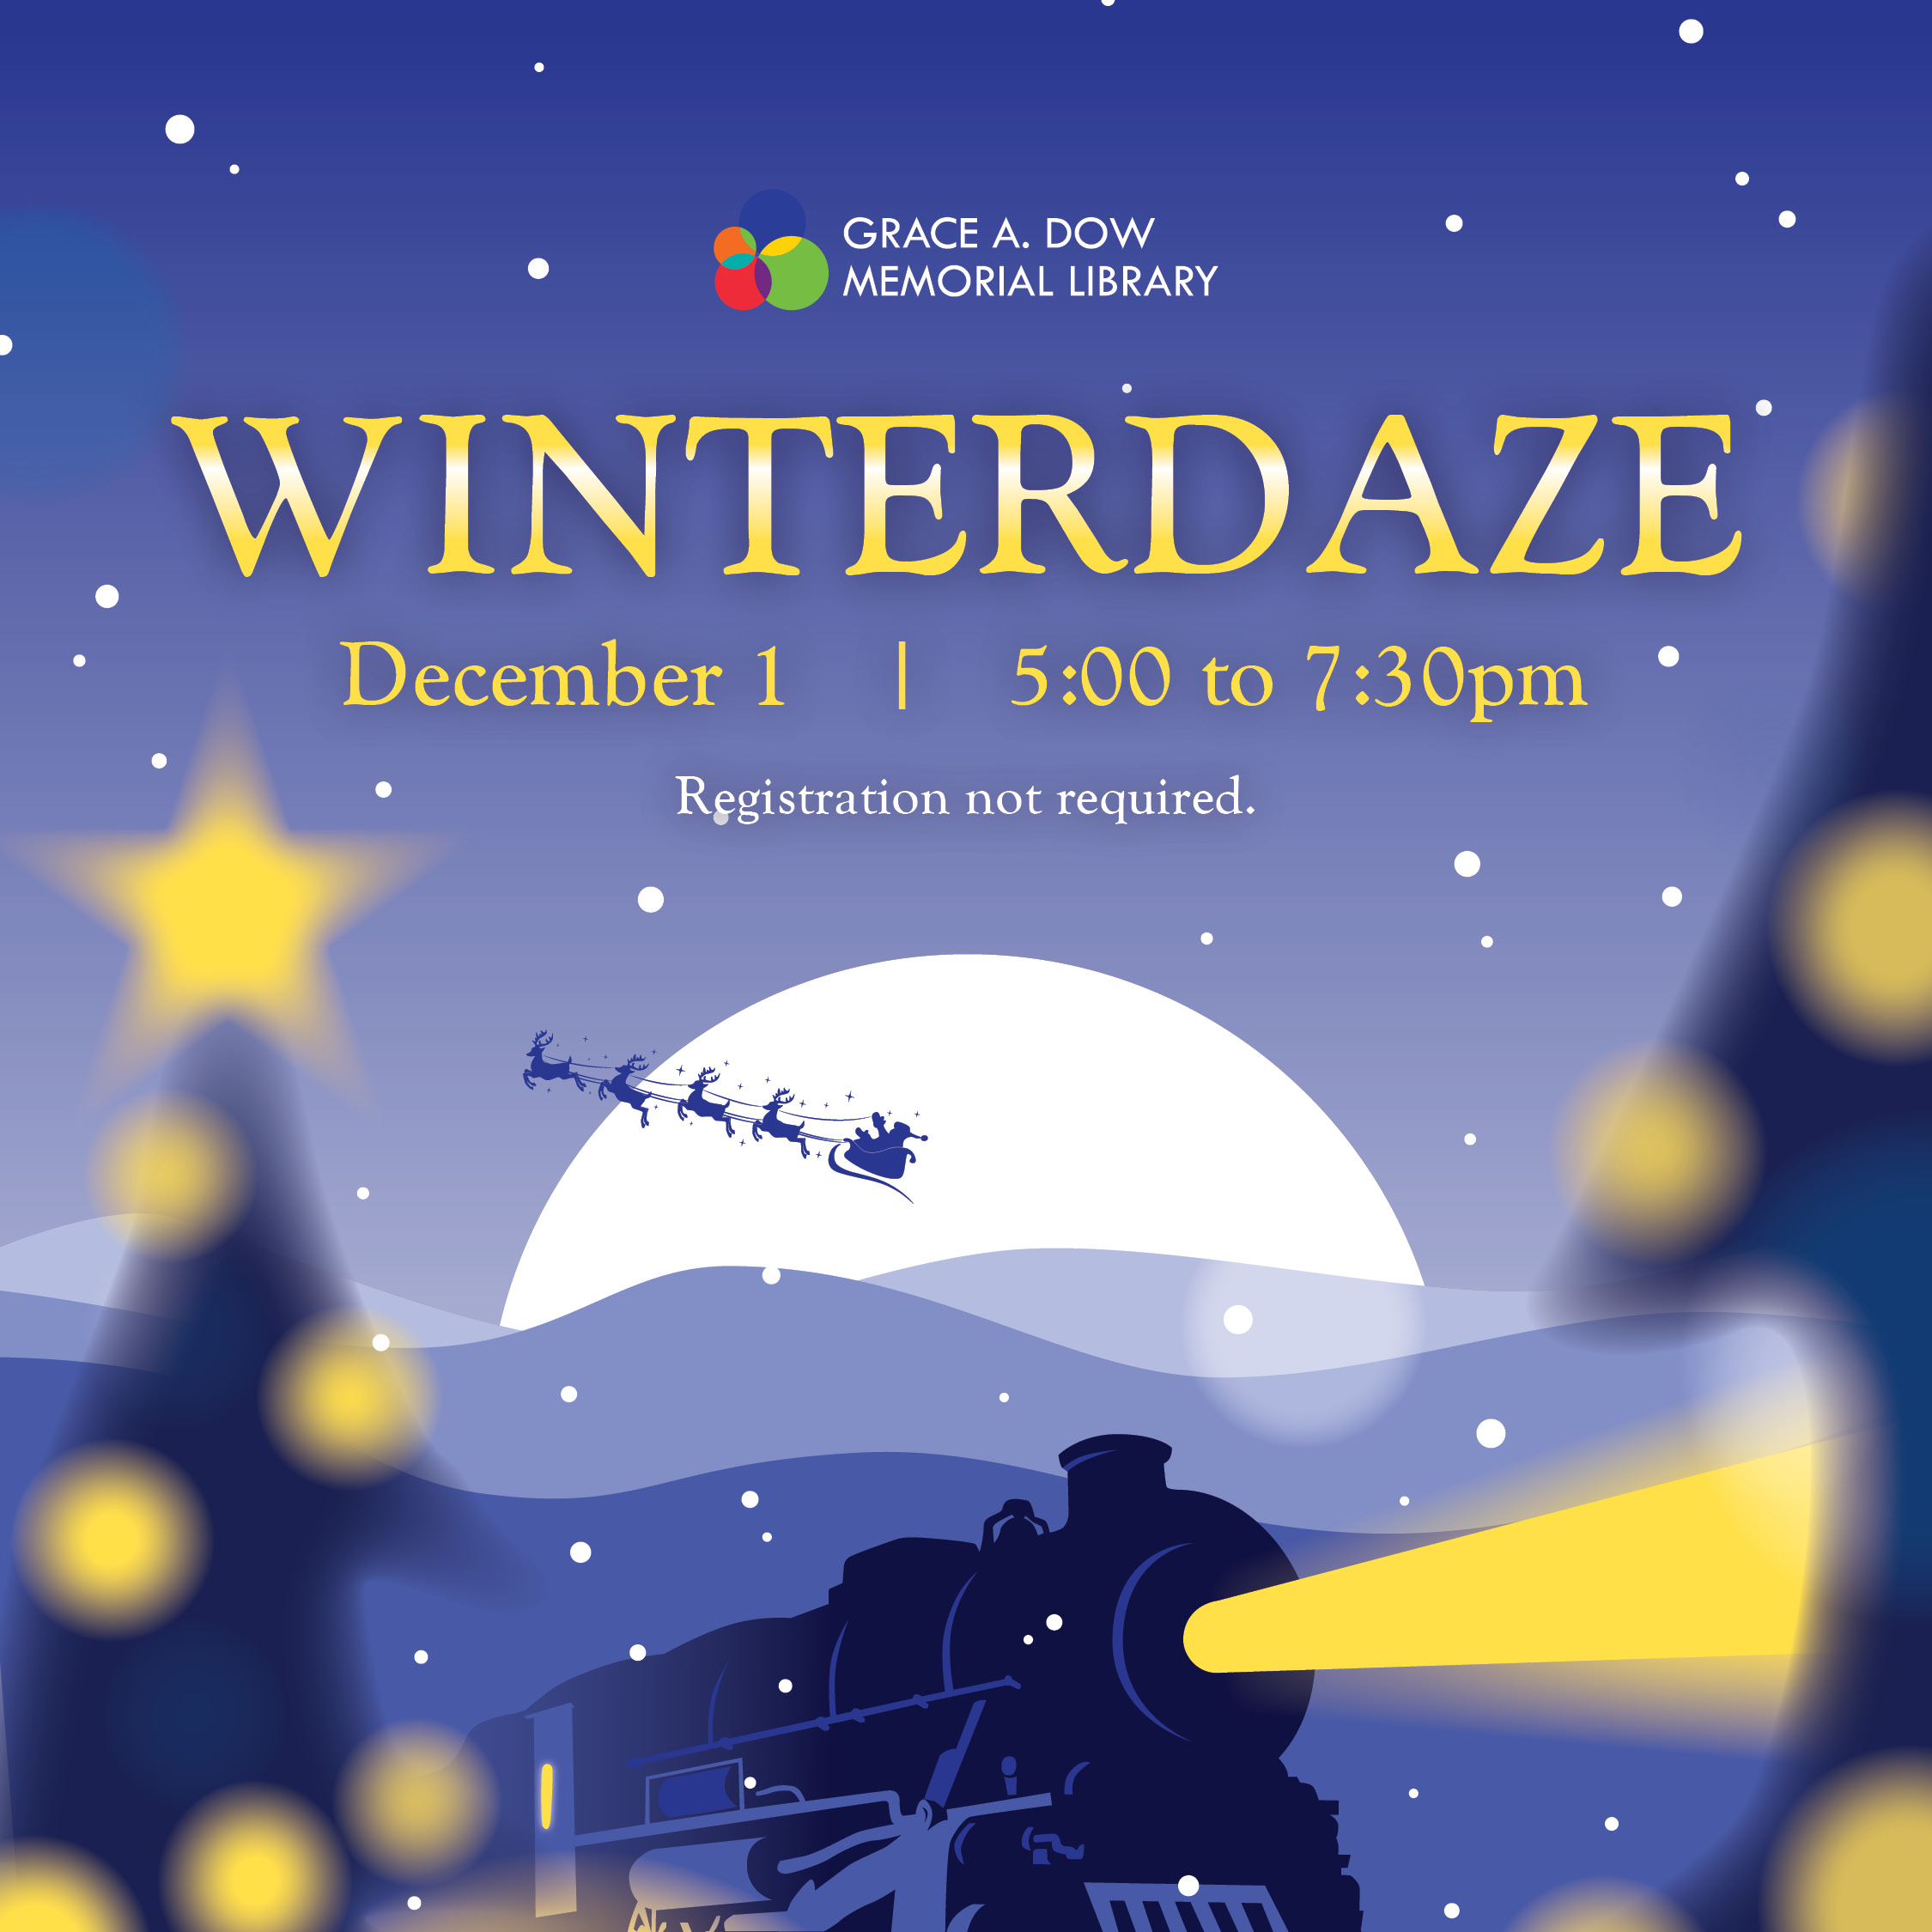 Winterdaze Friday, December 1 from 5-7:30pm